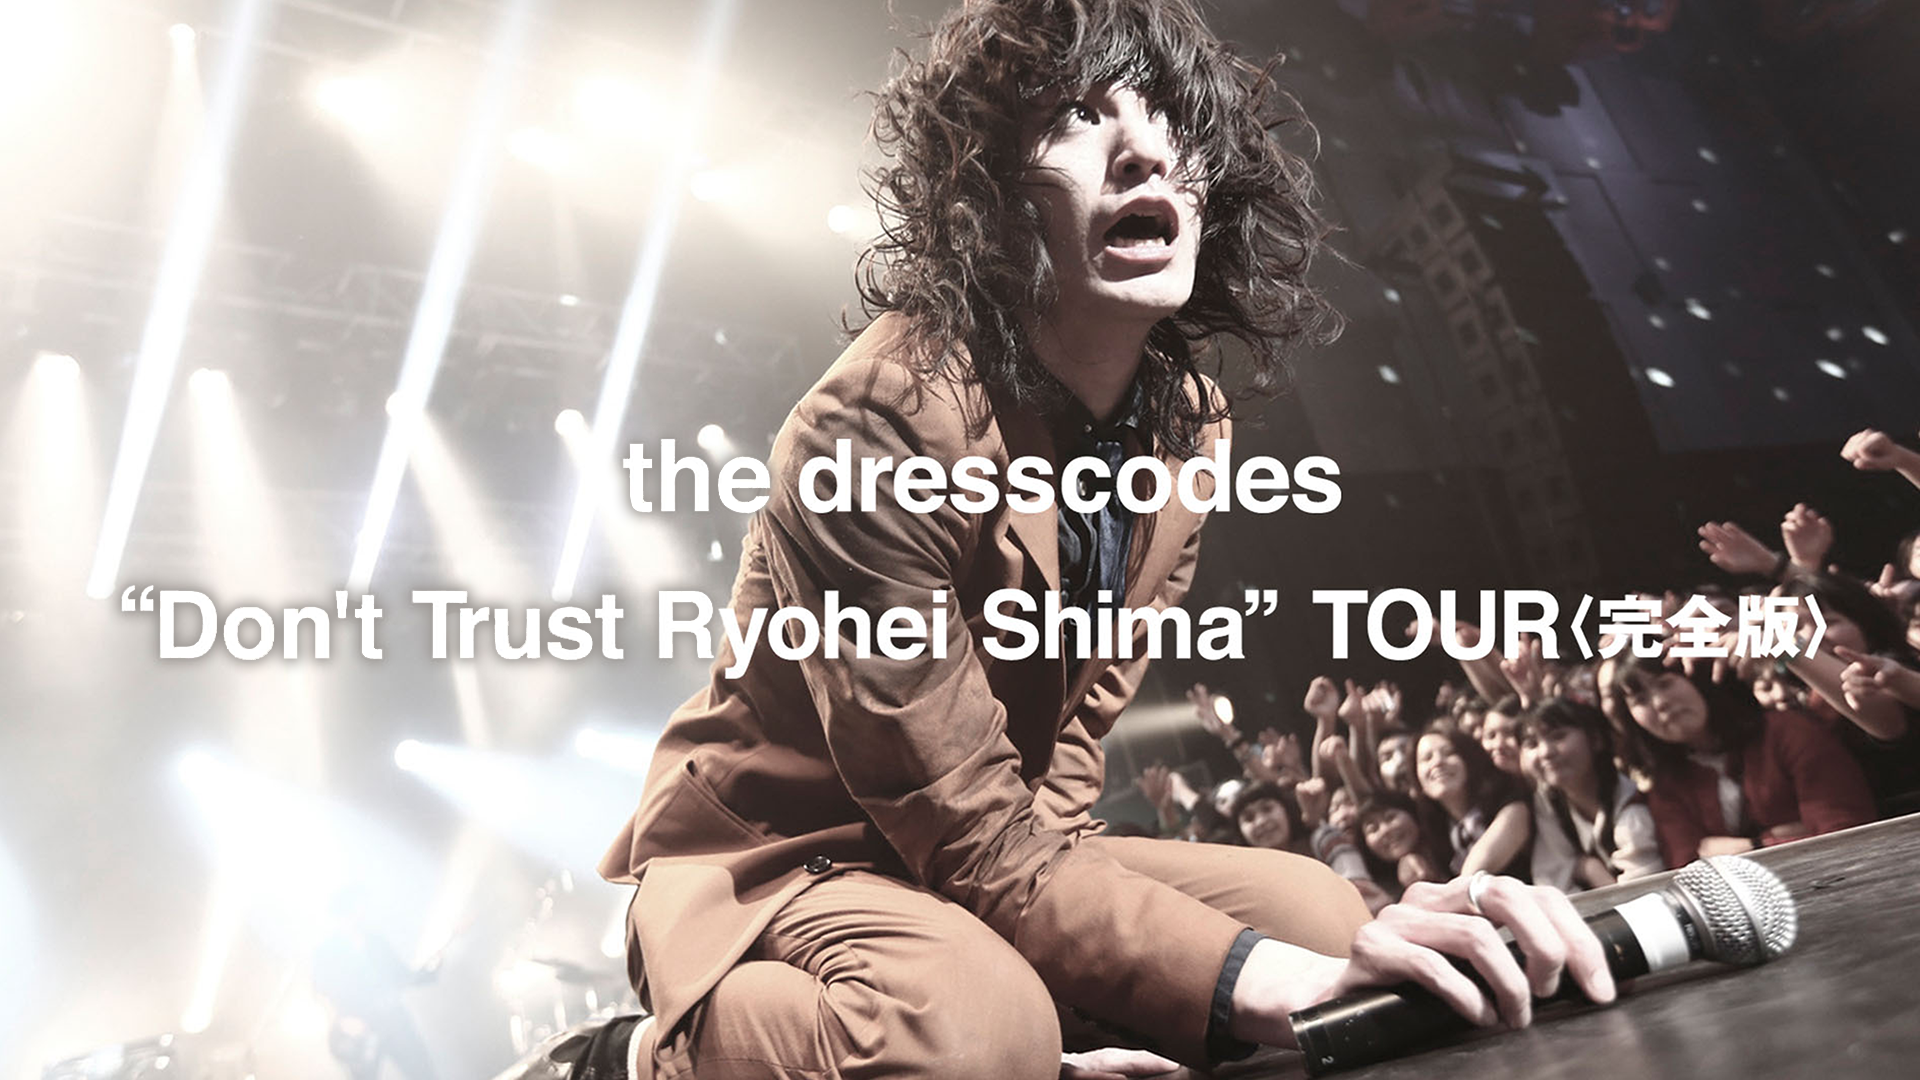 Don't Trust Ryohei Shima” TOUR 〈完全版〉(音楽・ライブ / 2015) - 動画配信 | U-NEXT  31日間無料トライアル